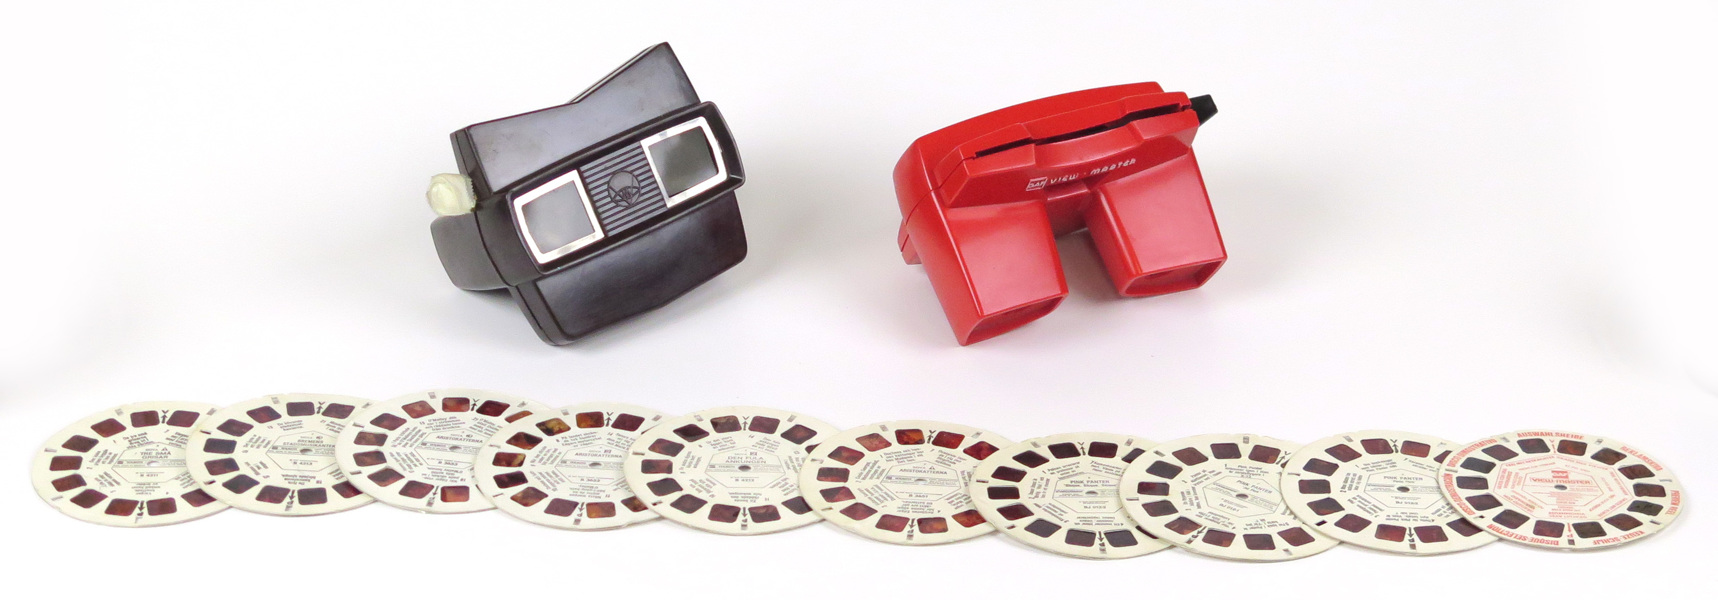 Viewmasters, 2 st, bakelit respektive plast, 1950-60-tal, _3701a_8d87436e14870bc_lg.jpeg